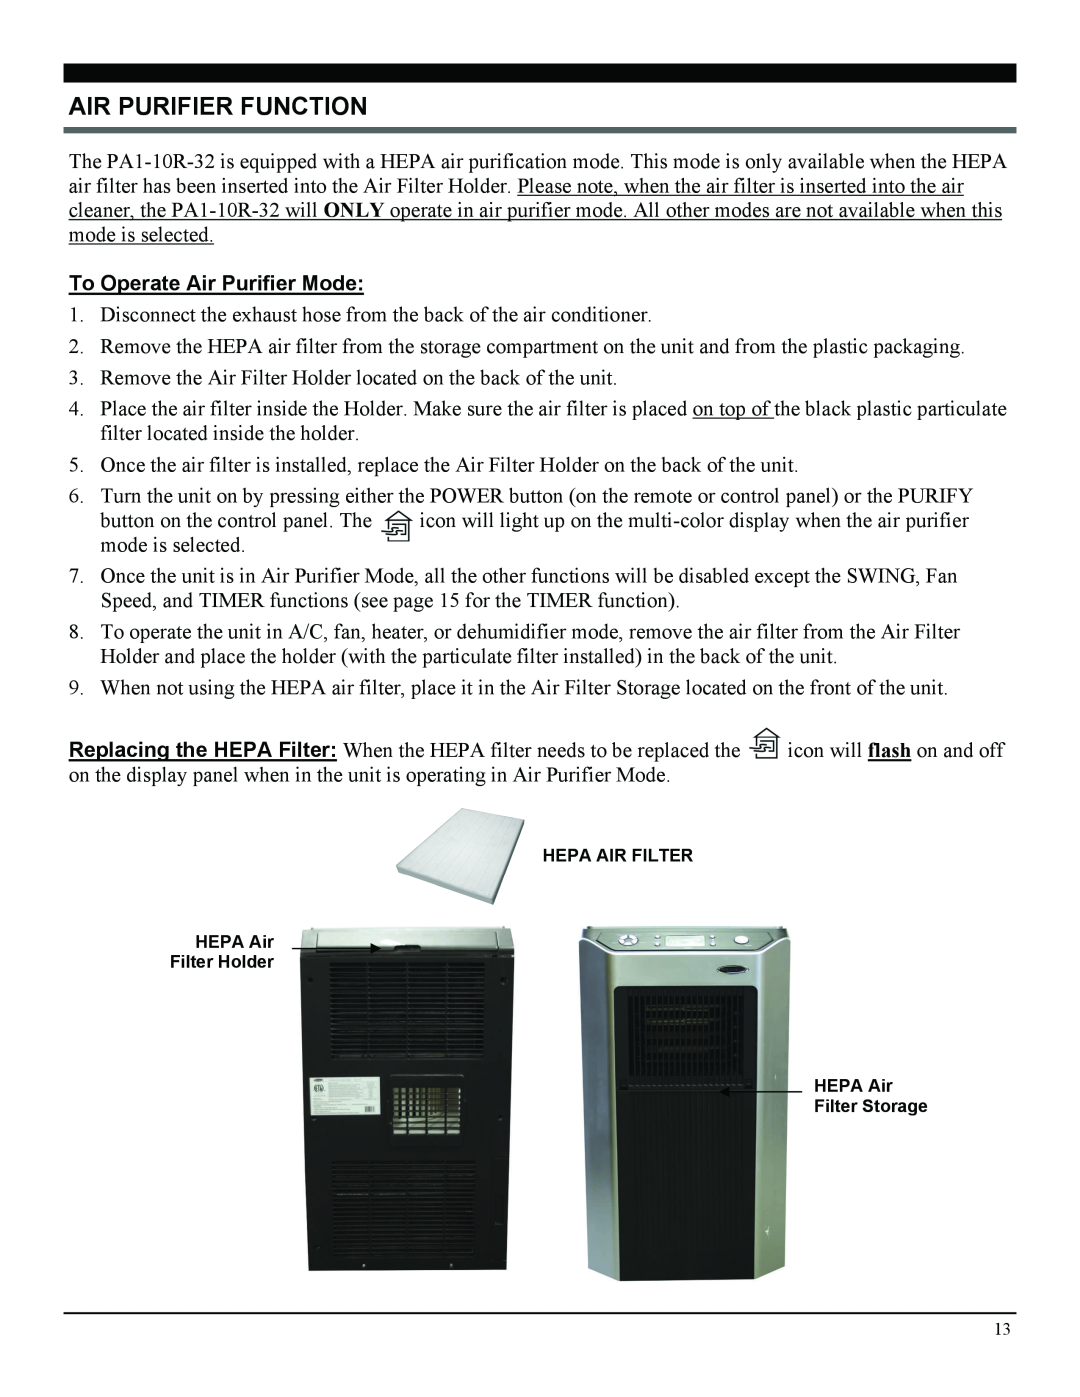 Soleus Air 3046364, PA1-10R-32 manual Air Purifier Function, To Operate Air Purifier Mode 